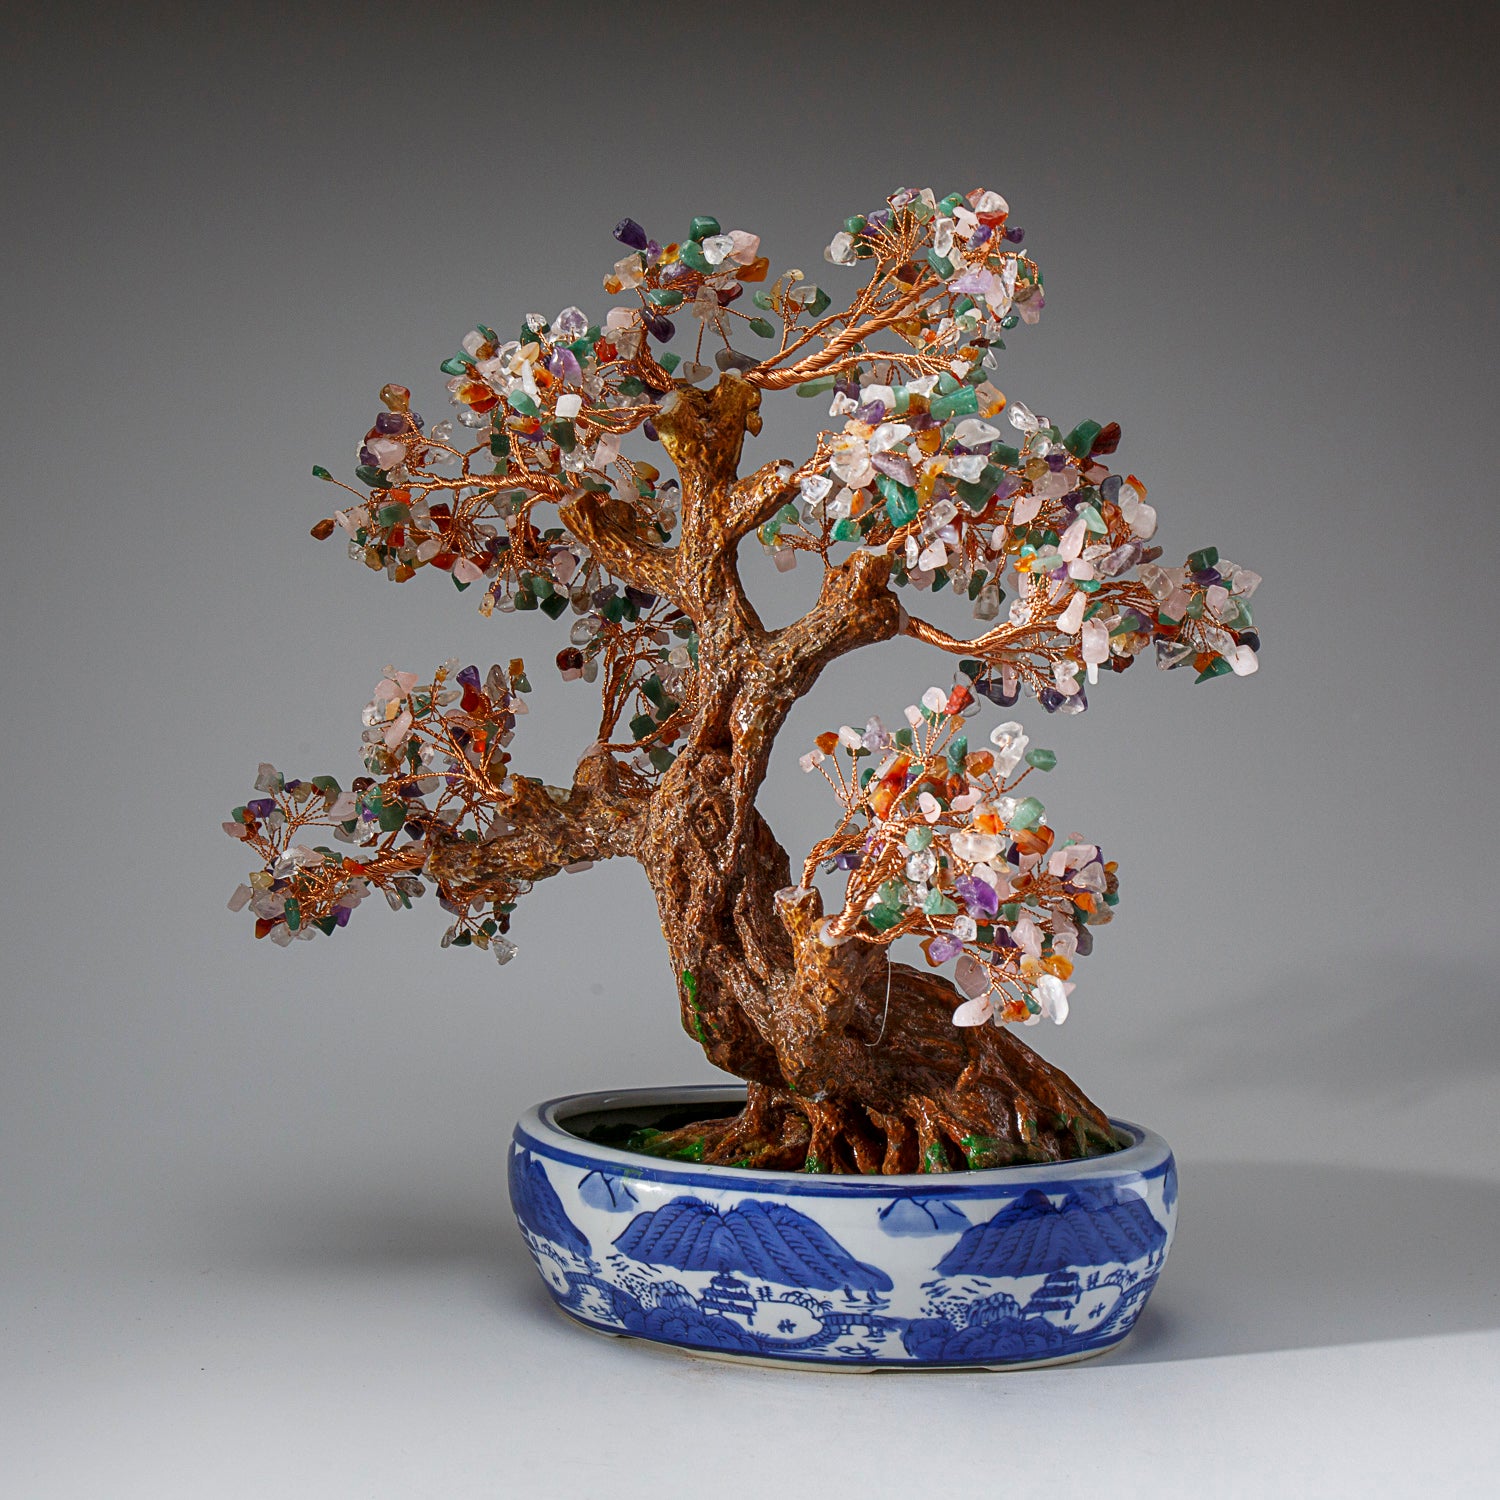 Genuine Multi Gemstone Bonsai Tree in Oval Ceramic Pot (14” Tall)